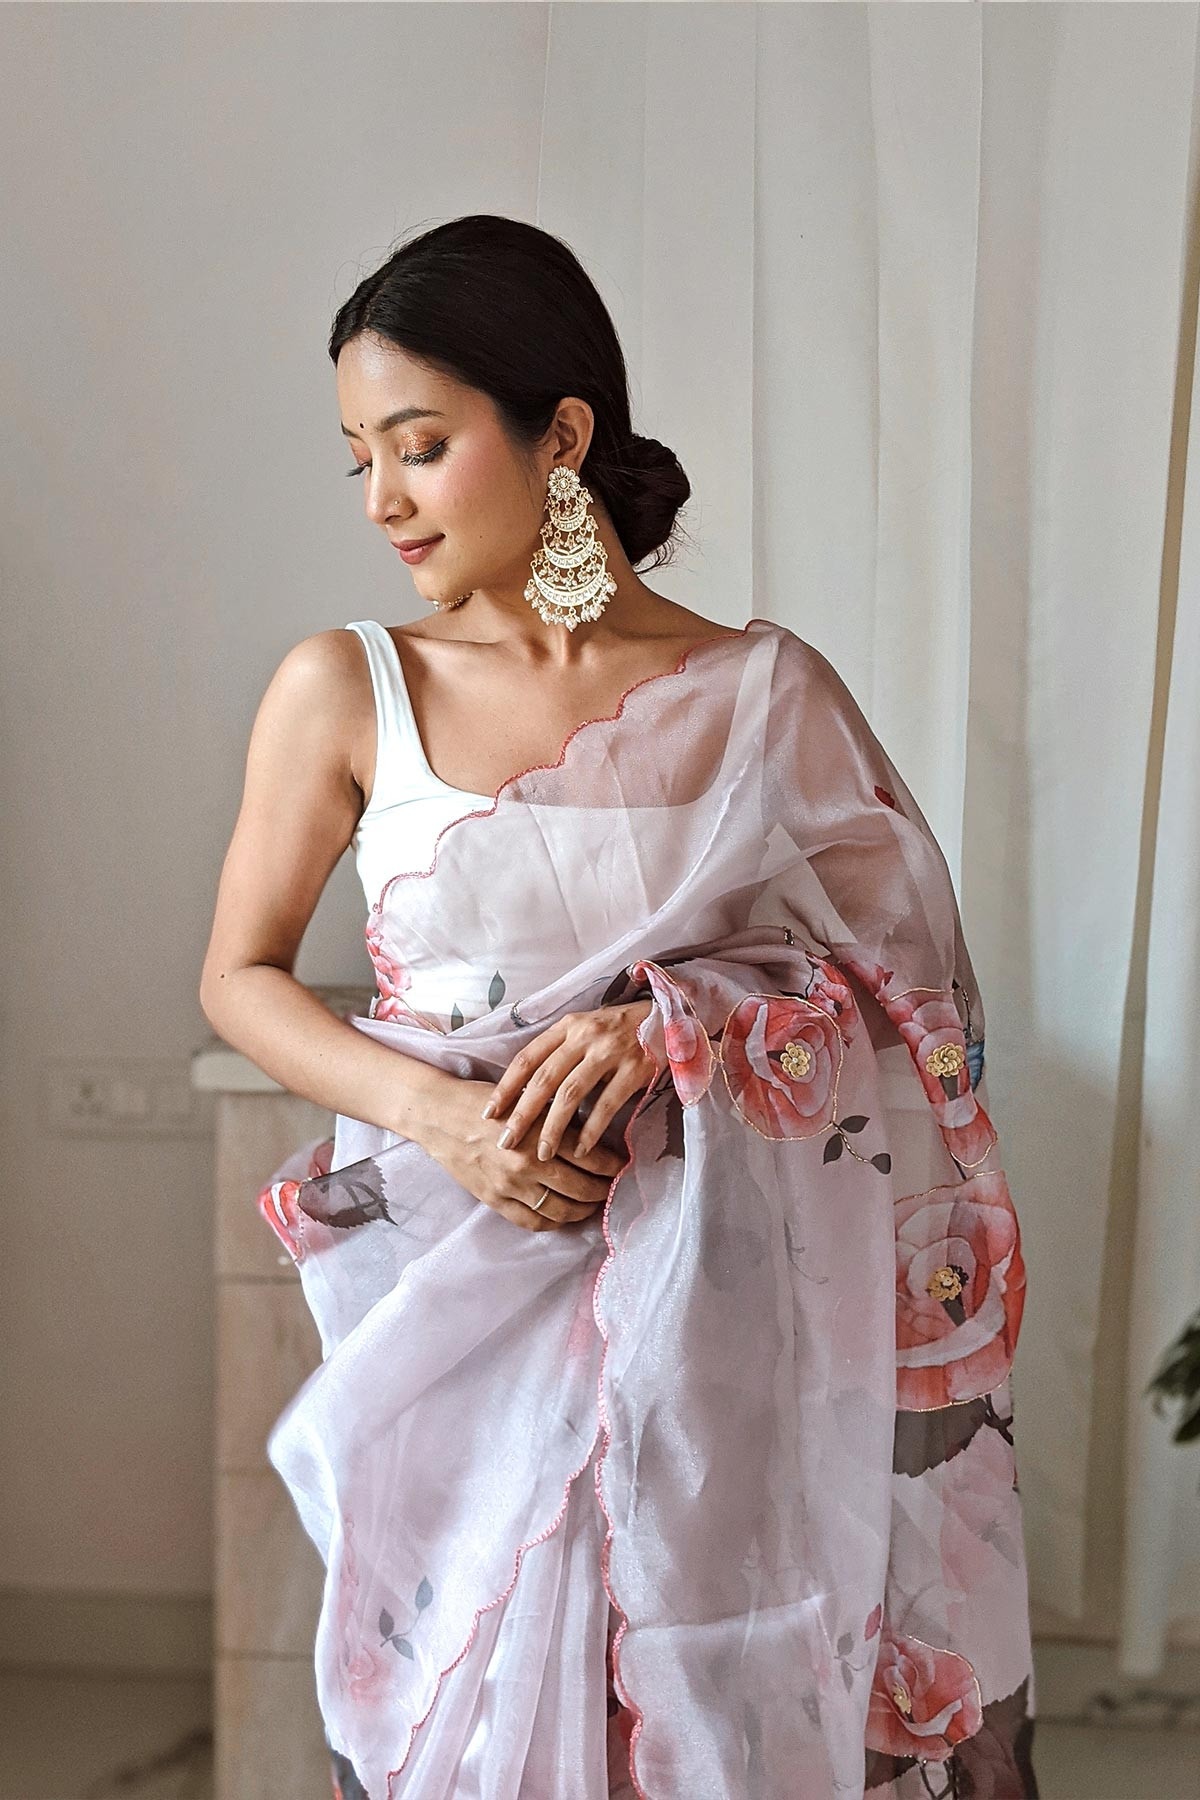 Premium Organza Digital Printed saree with Embroidery Work - Pink